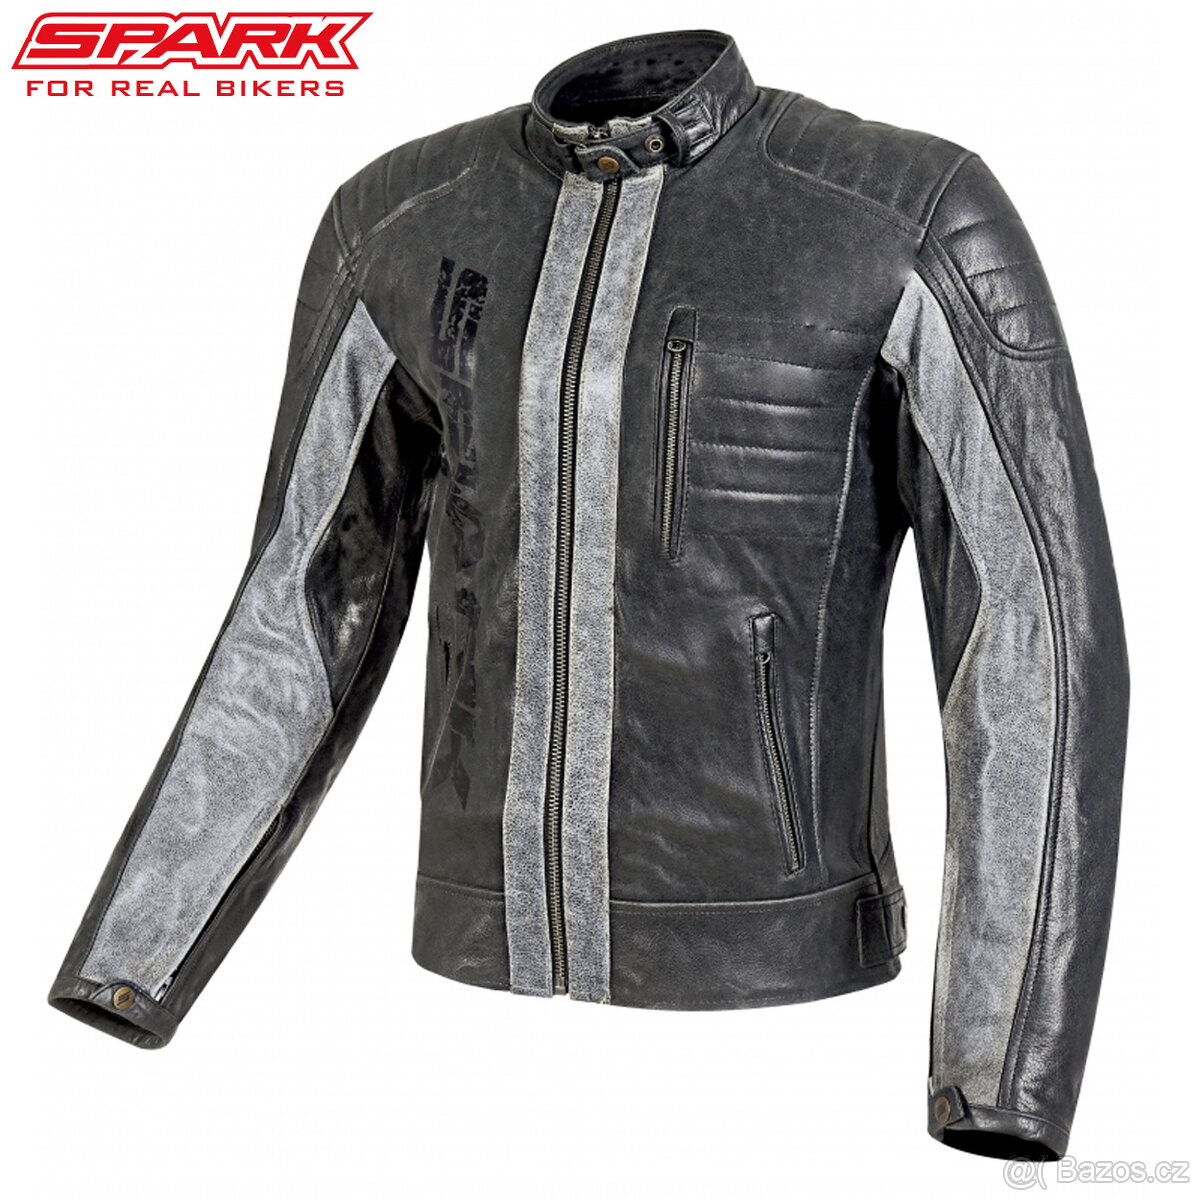 SPARK Hector - pánská kožená bunda černá vel. M, XL,